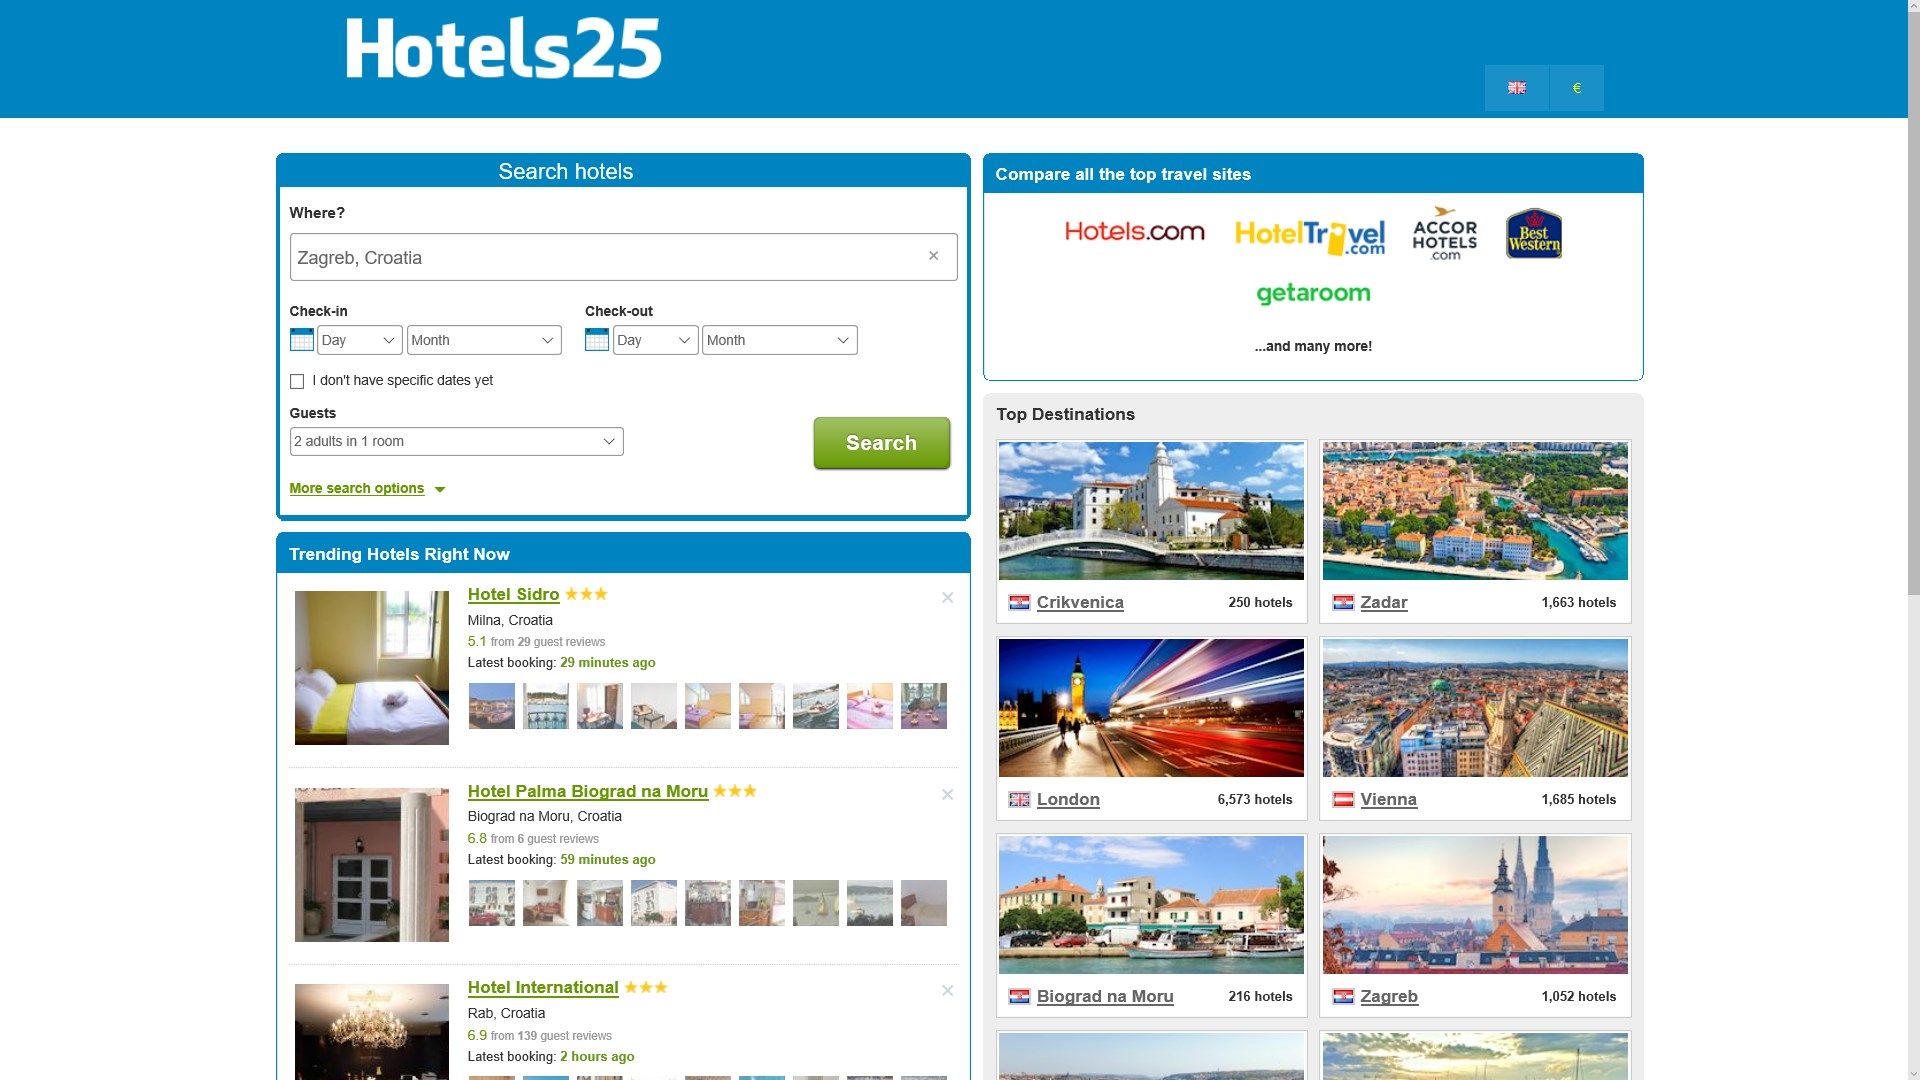 Hotels25.com